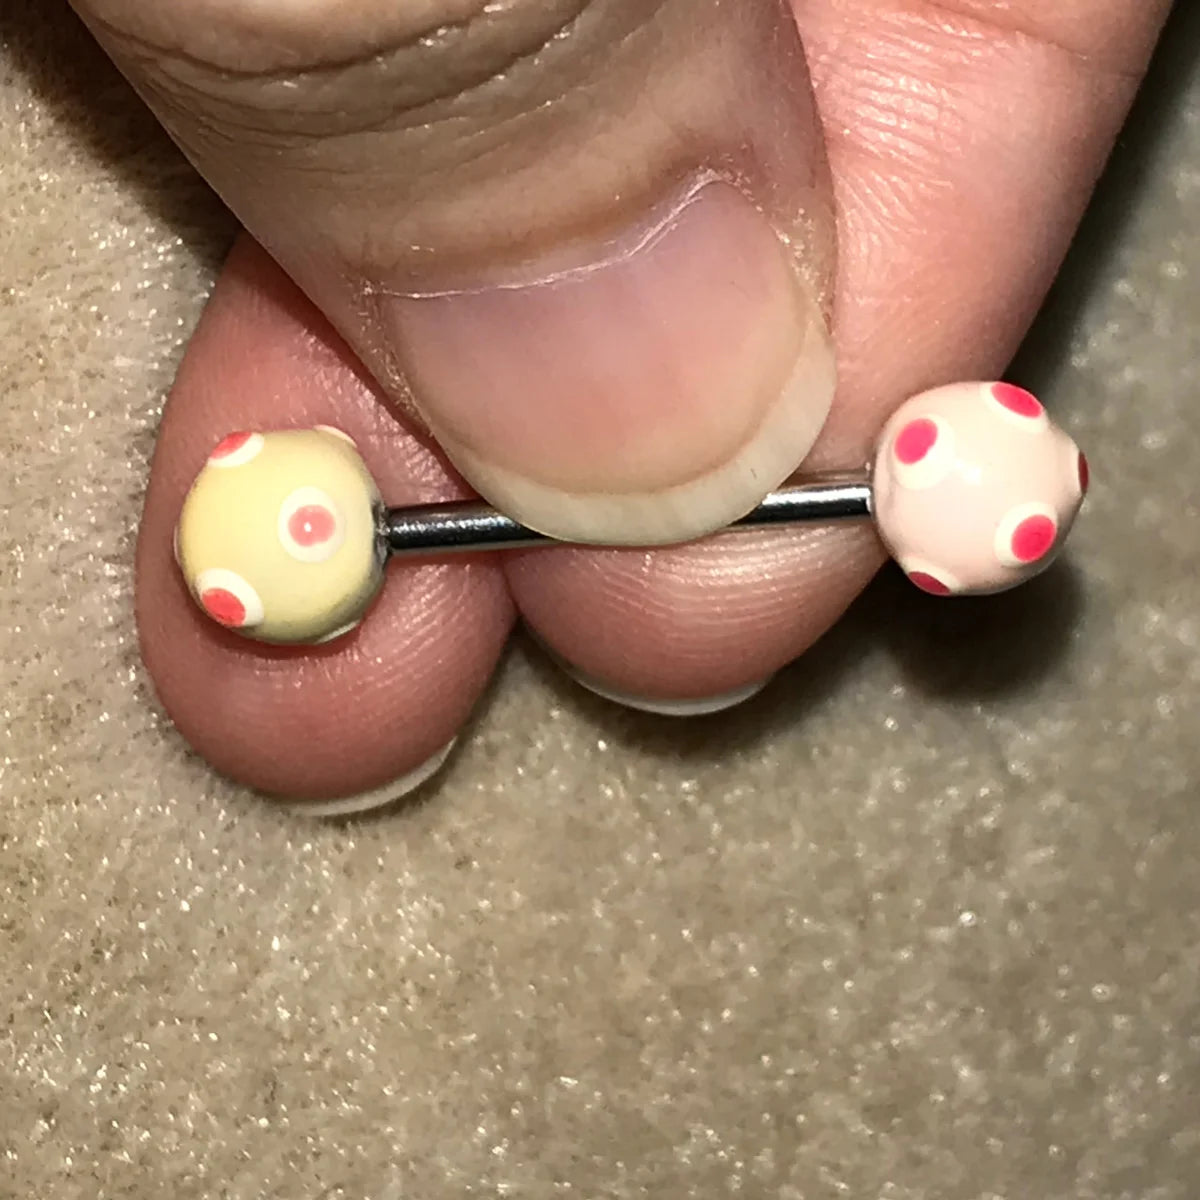 14 Gauge White and Pink Polka Dot Tongue Ring